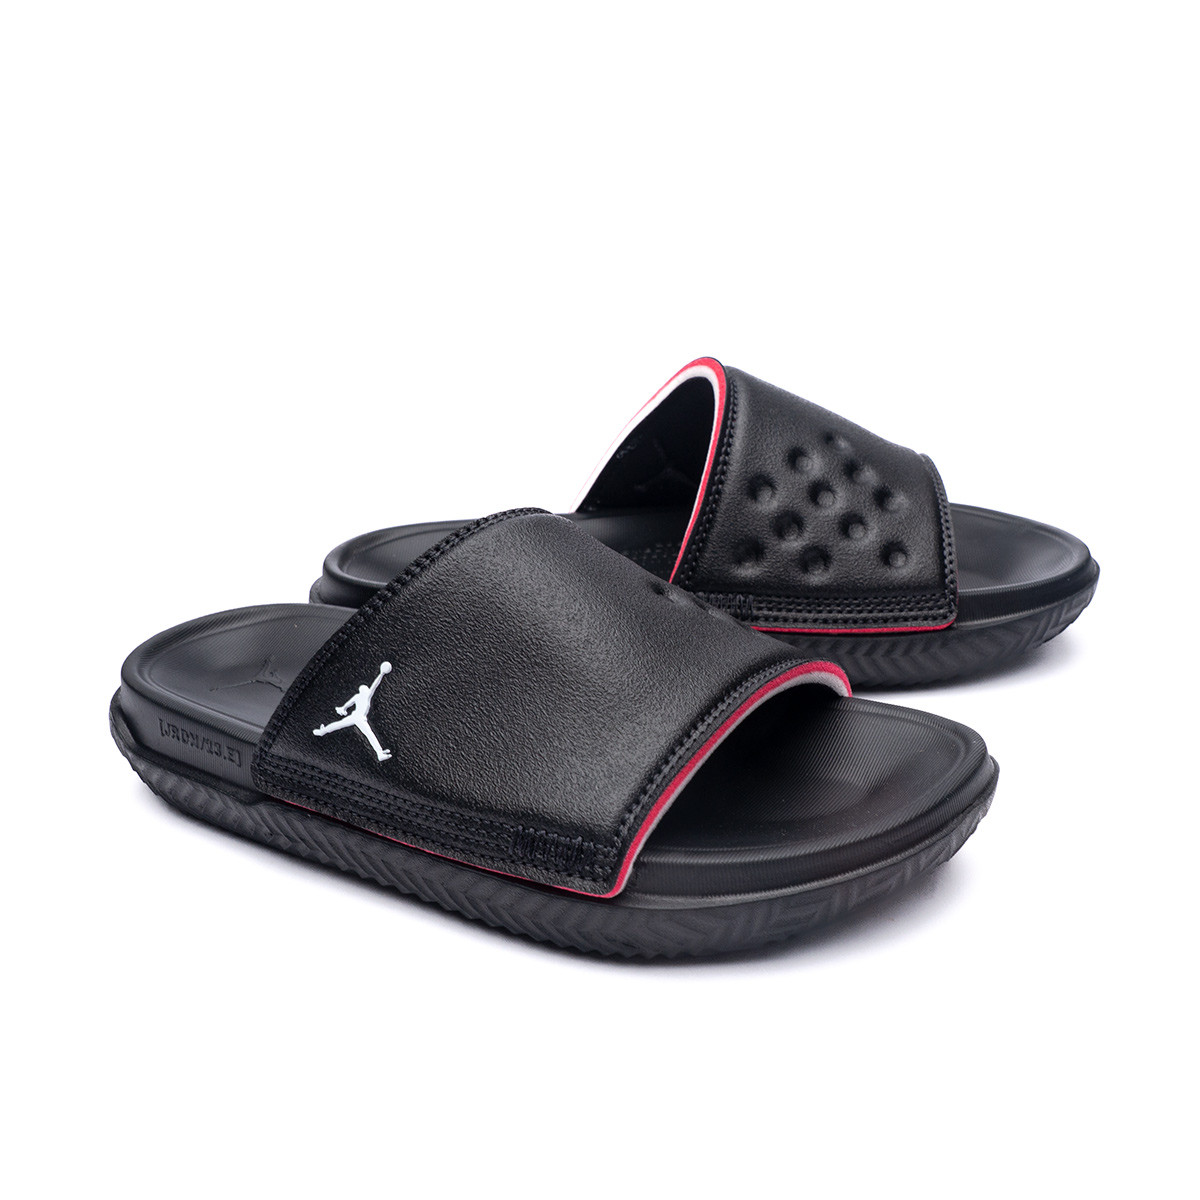 Chanclas Nike Jordan Play Slide Black-Univ Red-Photon Dust-Off Noir - Emotion